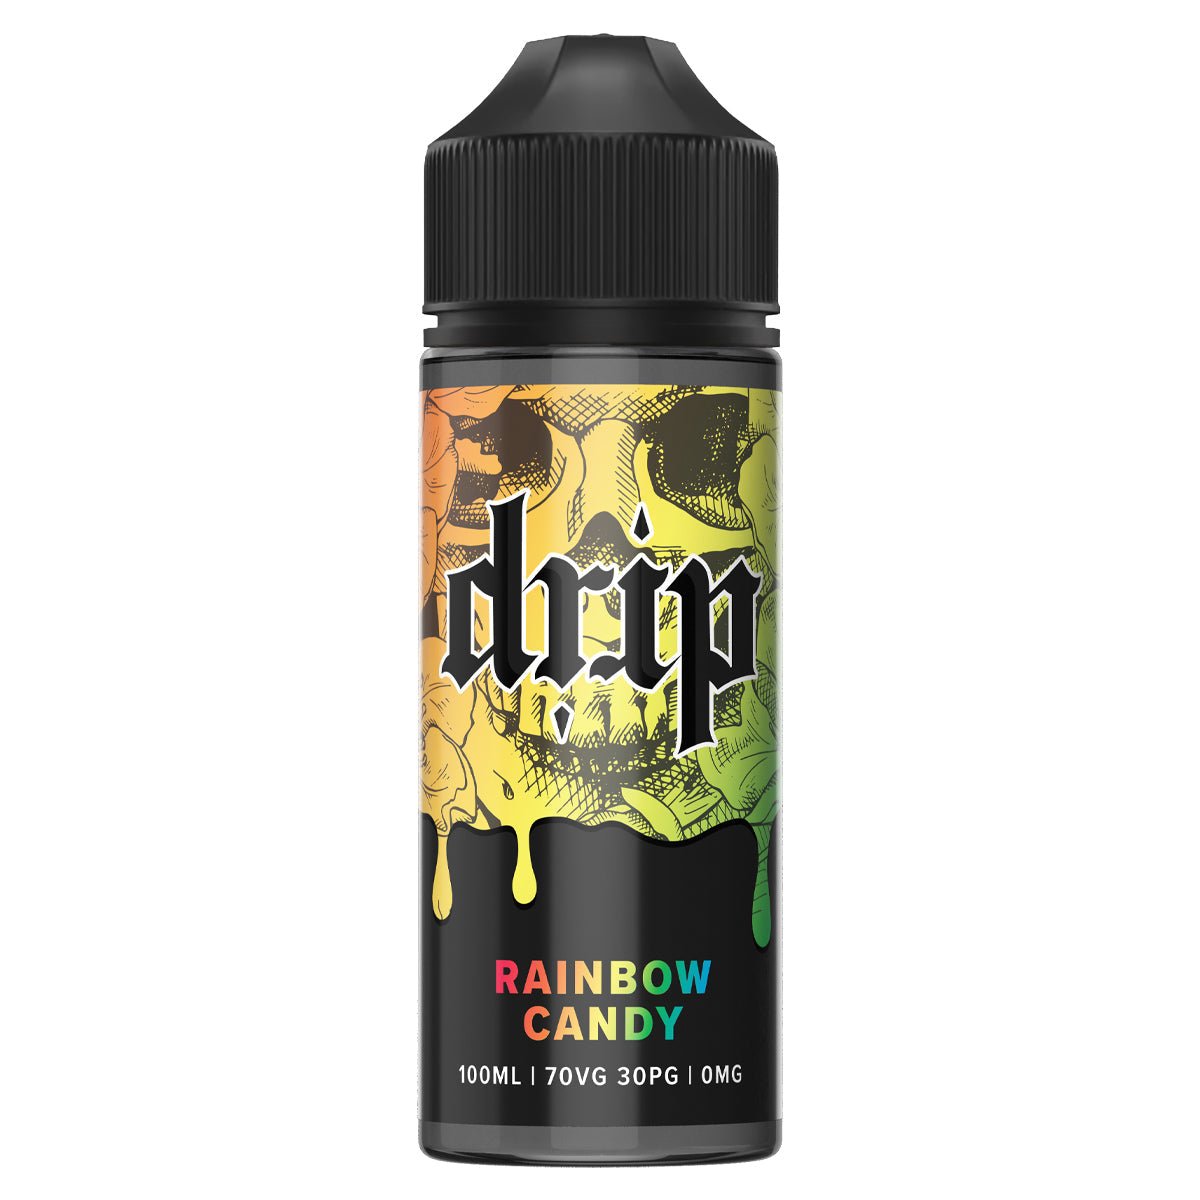 Rainbow Candy 100ml Shortfill By Drip - Manabush Eliquid - Tobacco E-liquid and Vape Juice